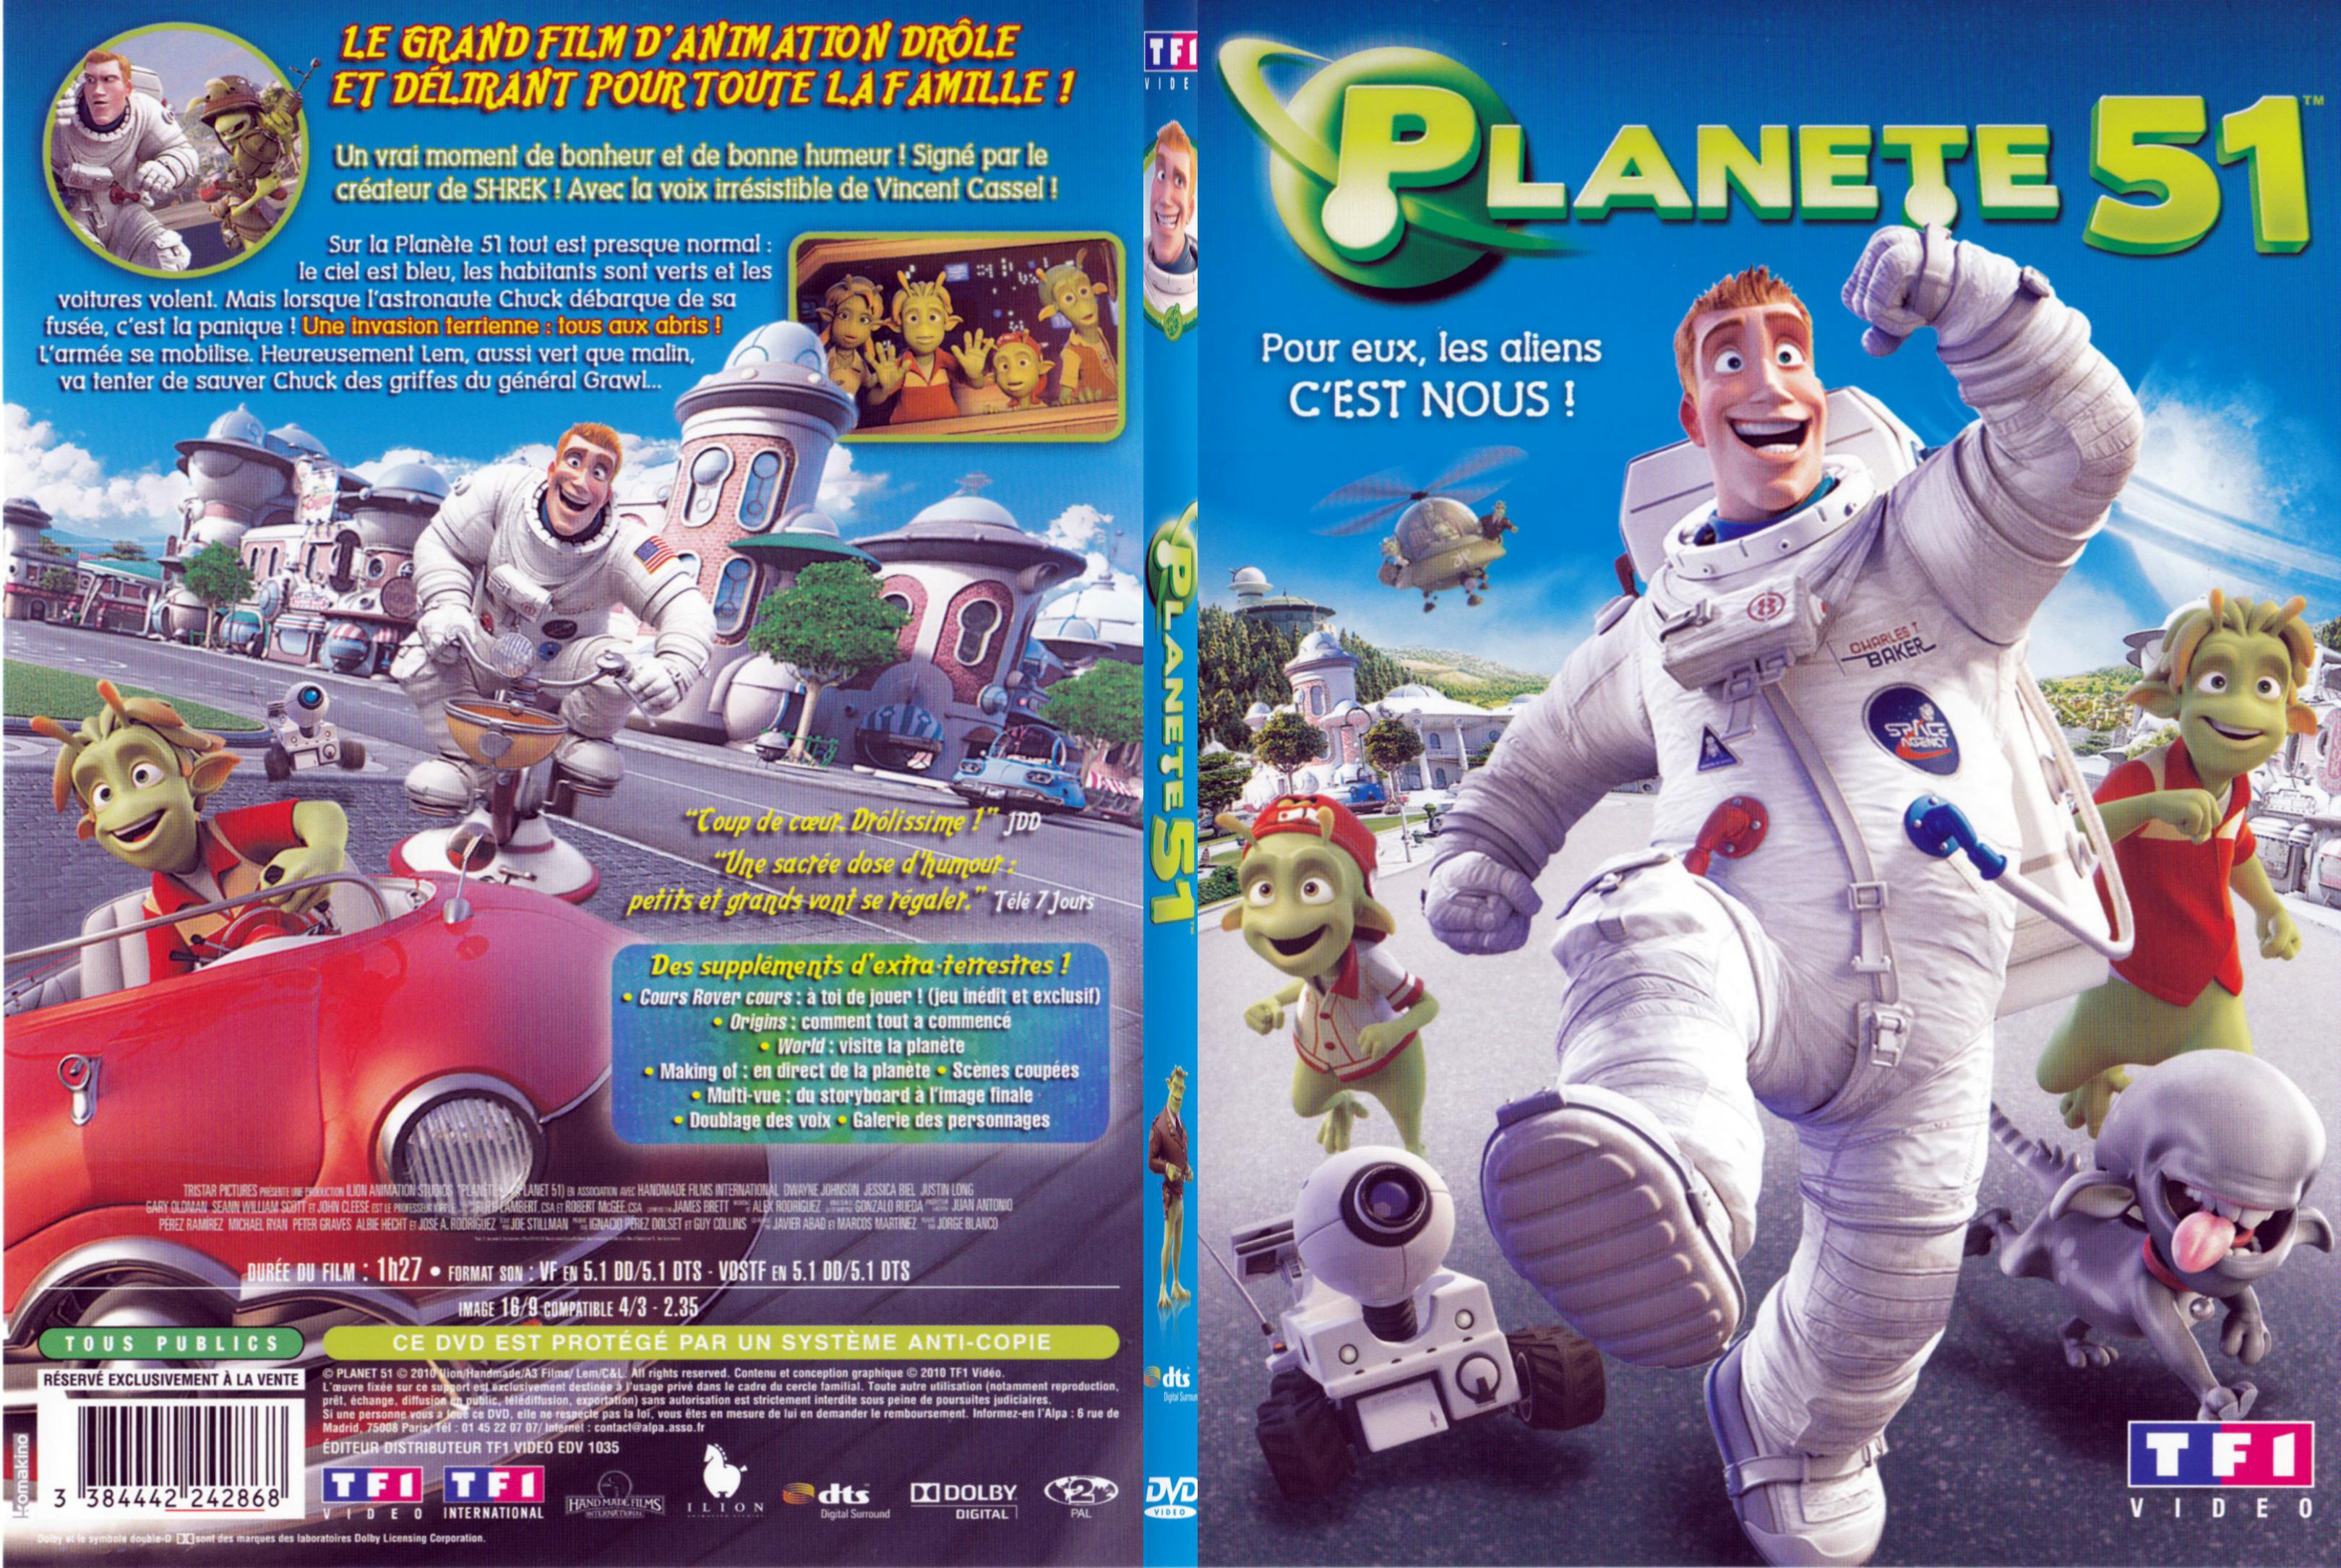 Jaquette DVD Planete 51 - SLIM